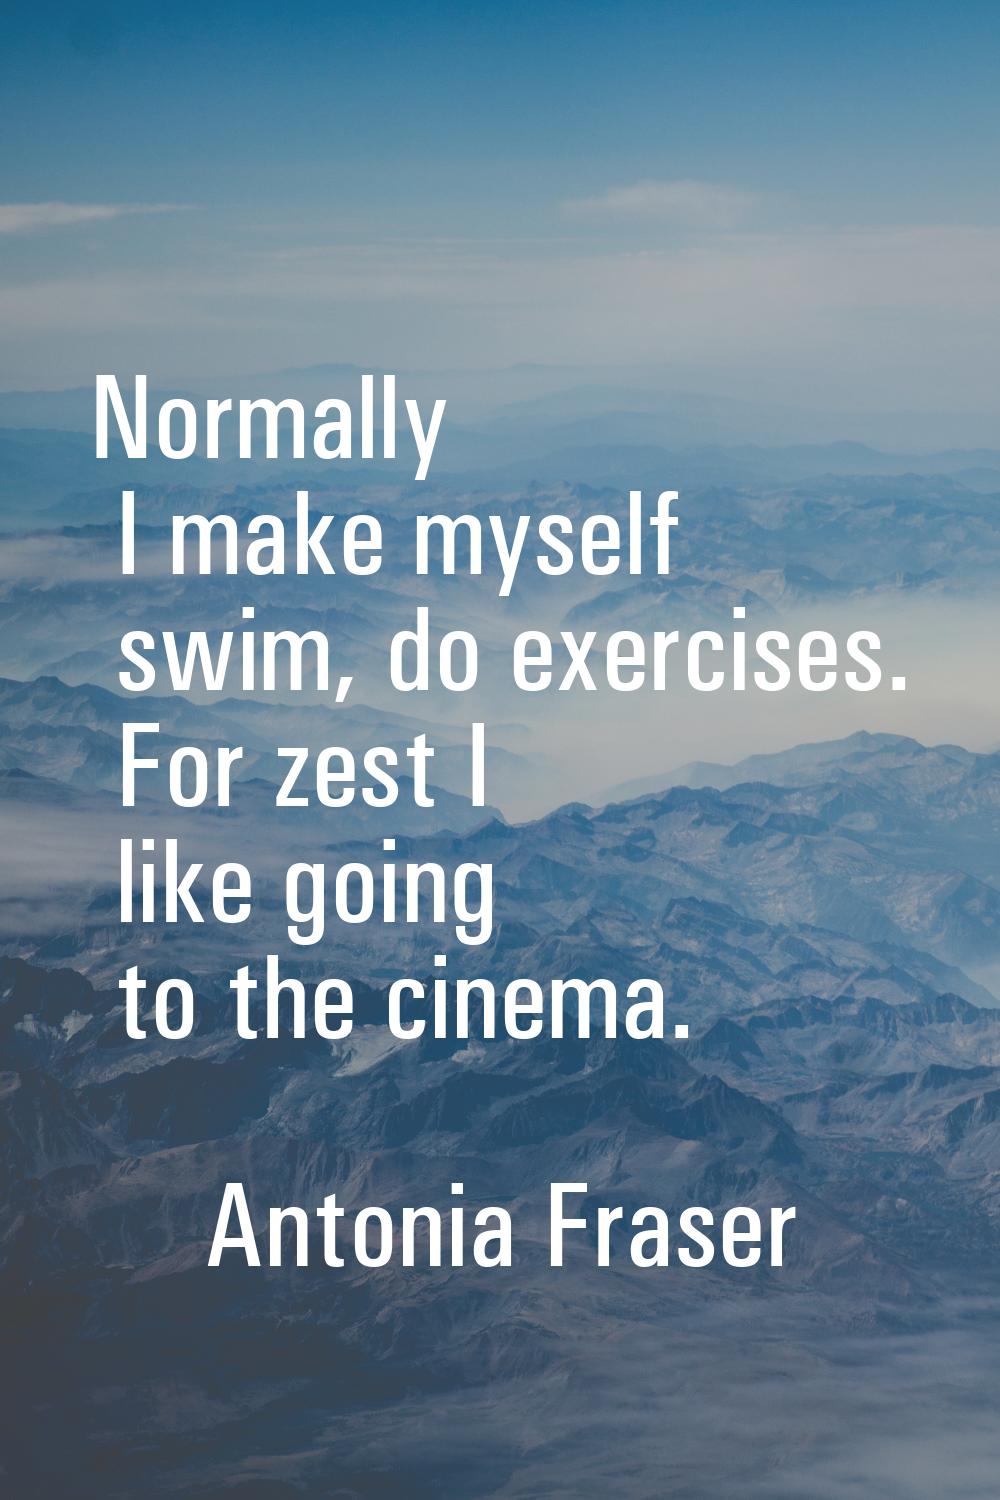 Normally I make myself swim, do exercises. For zest I like going to the cinema.